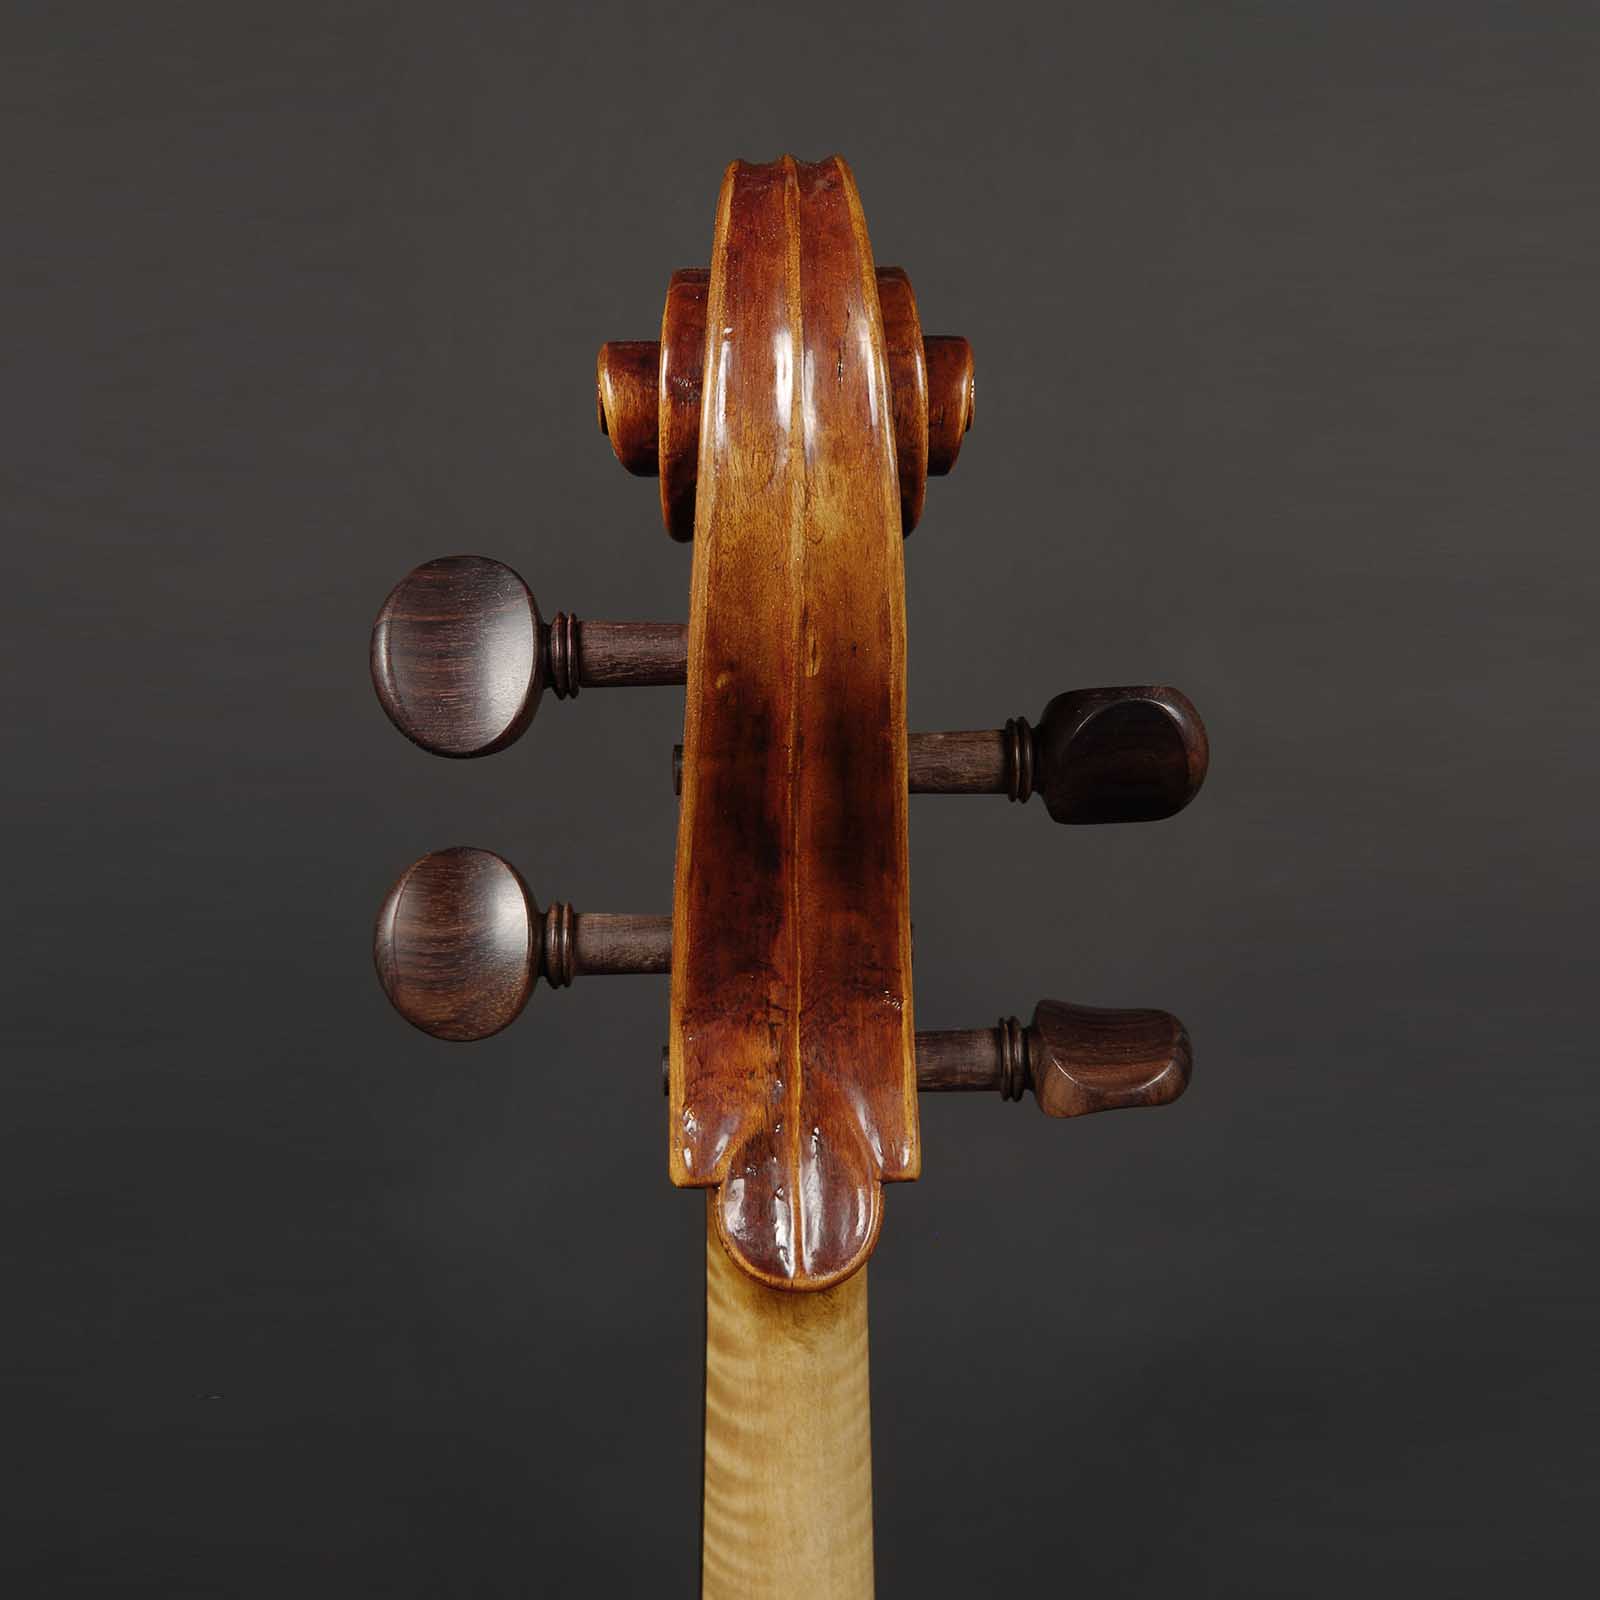 Antonio Stradivari Cremona 1730 “Feuermann“ “Maremmano“ - Image 7